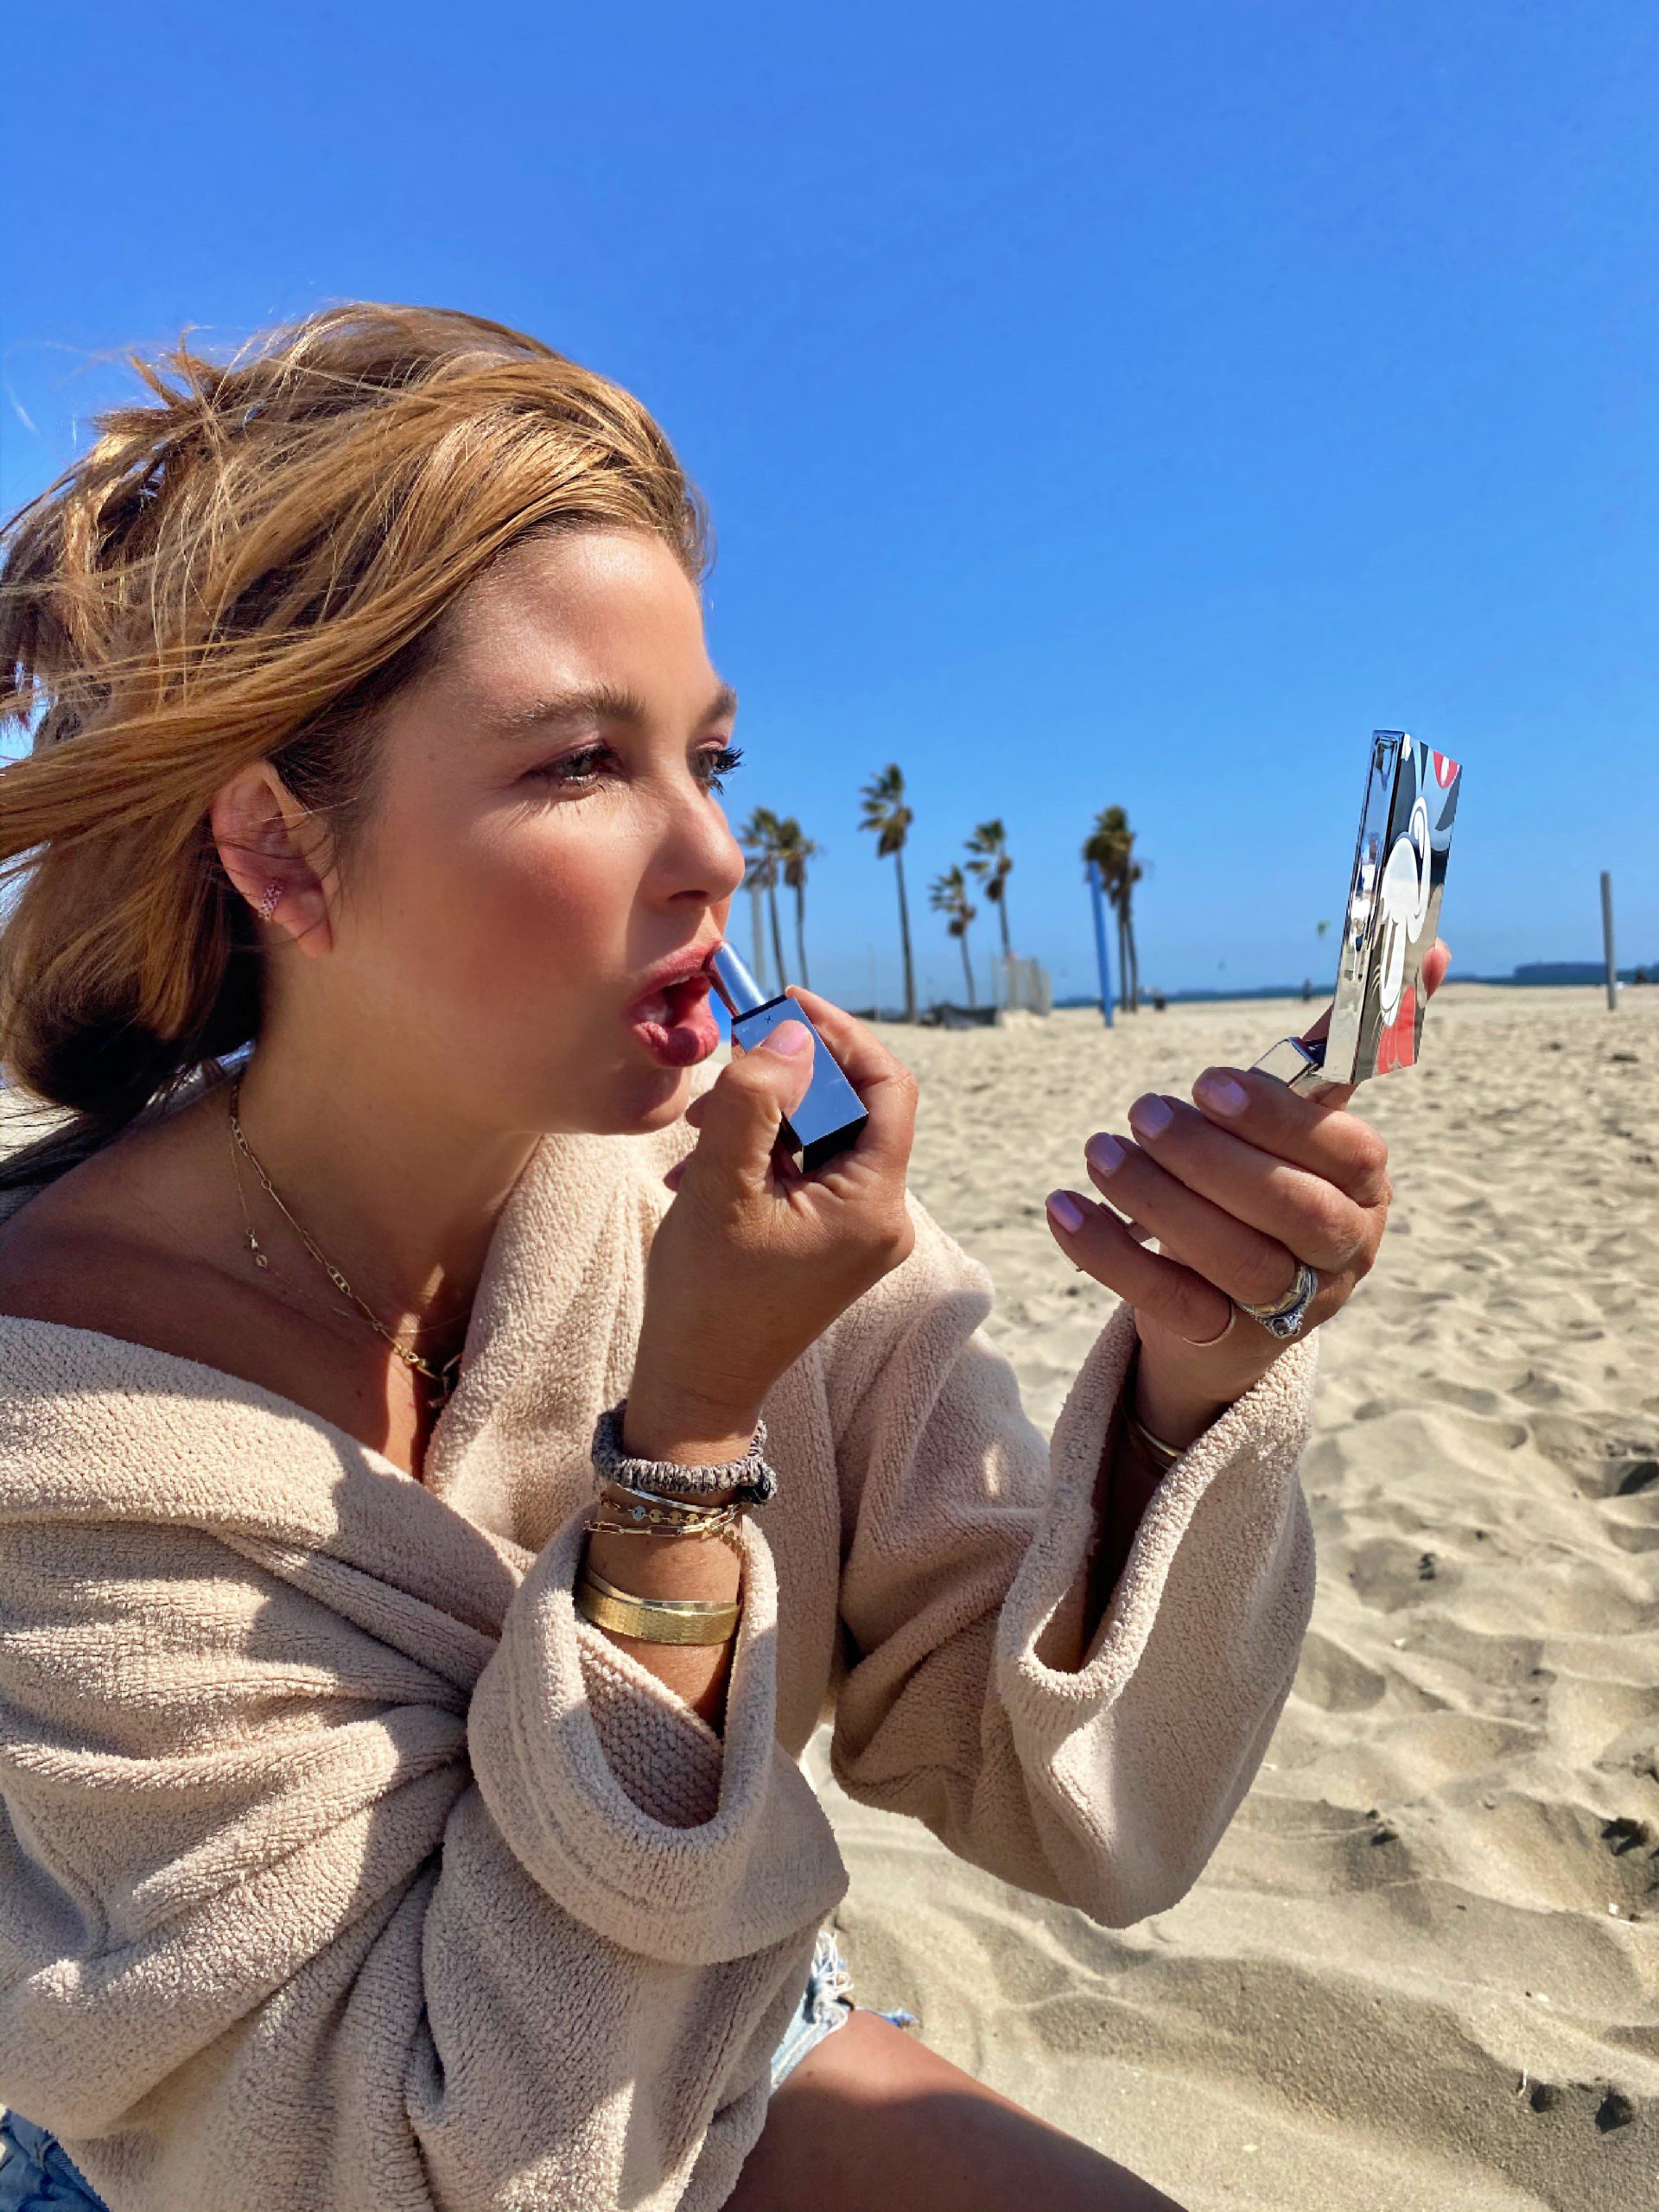 applying makeup at the beach